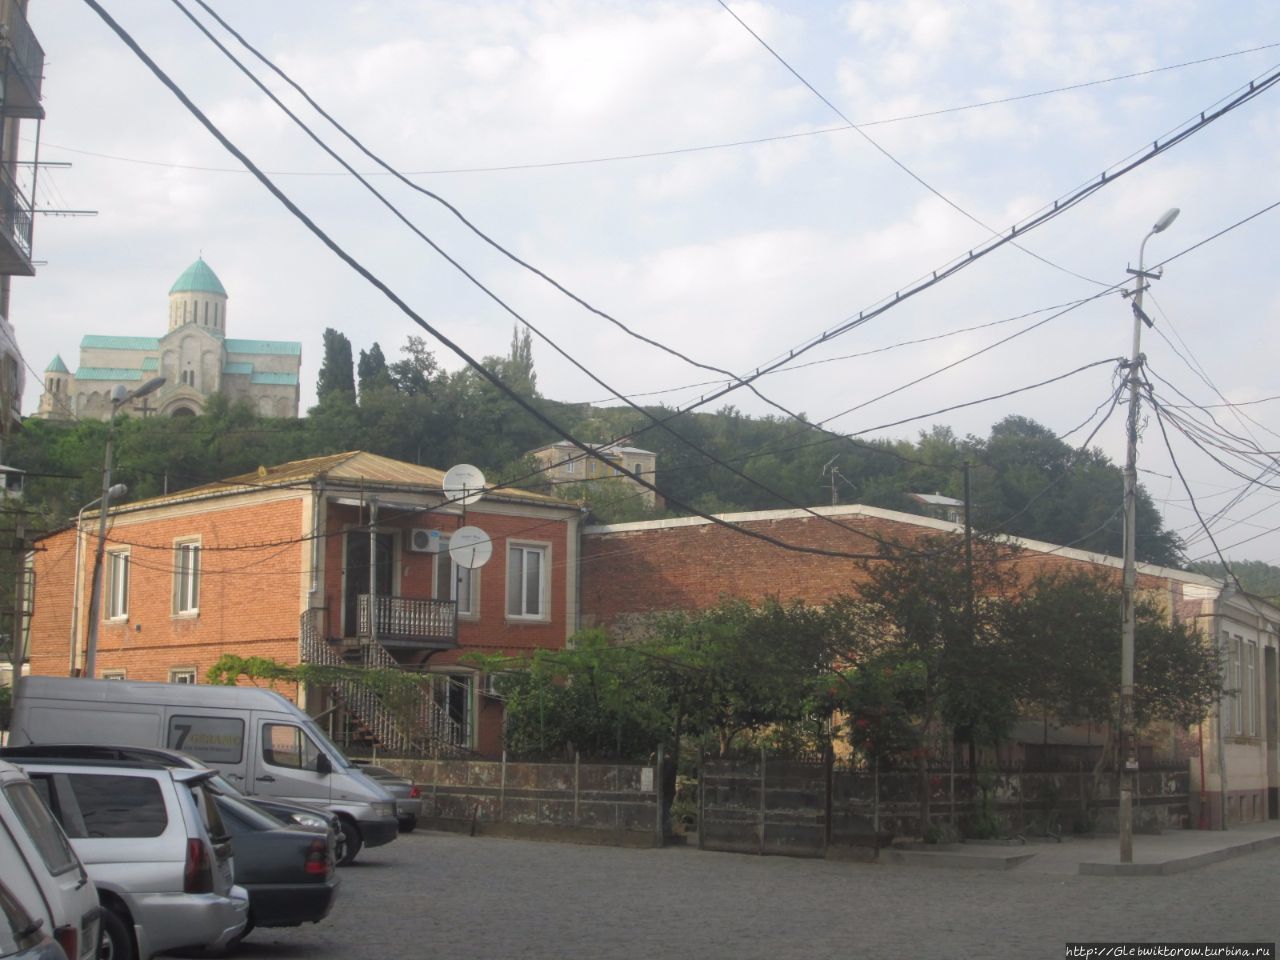 Прогулка в еврейский квартал Кутаиси, Грузия